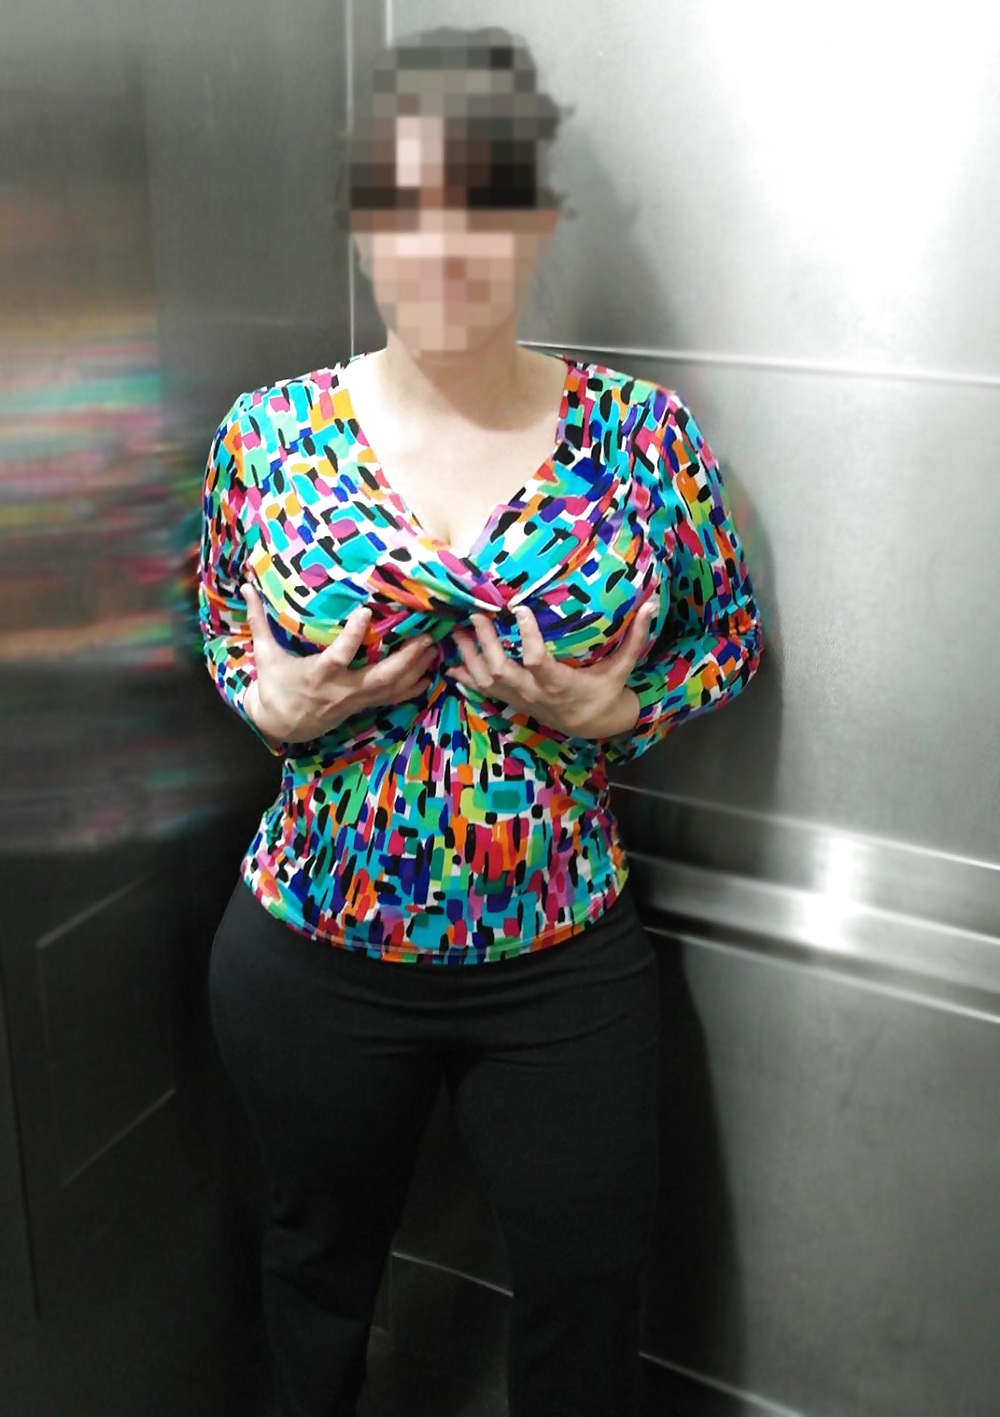 mom flashing her blue bra in elevator pict gal